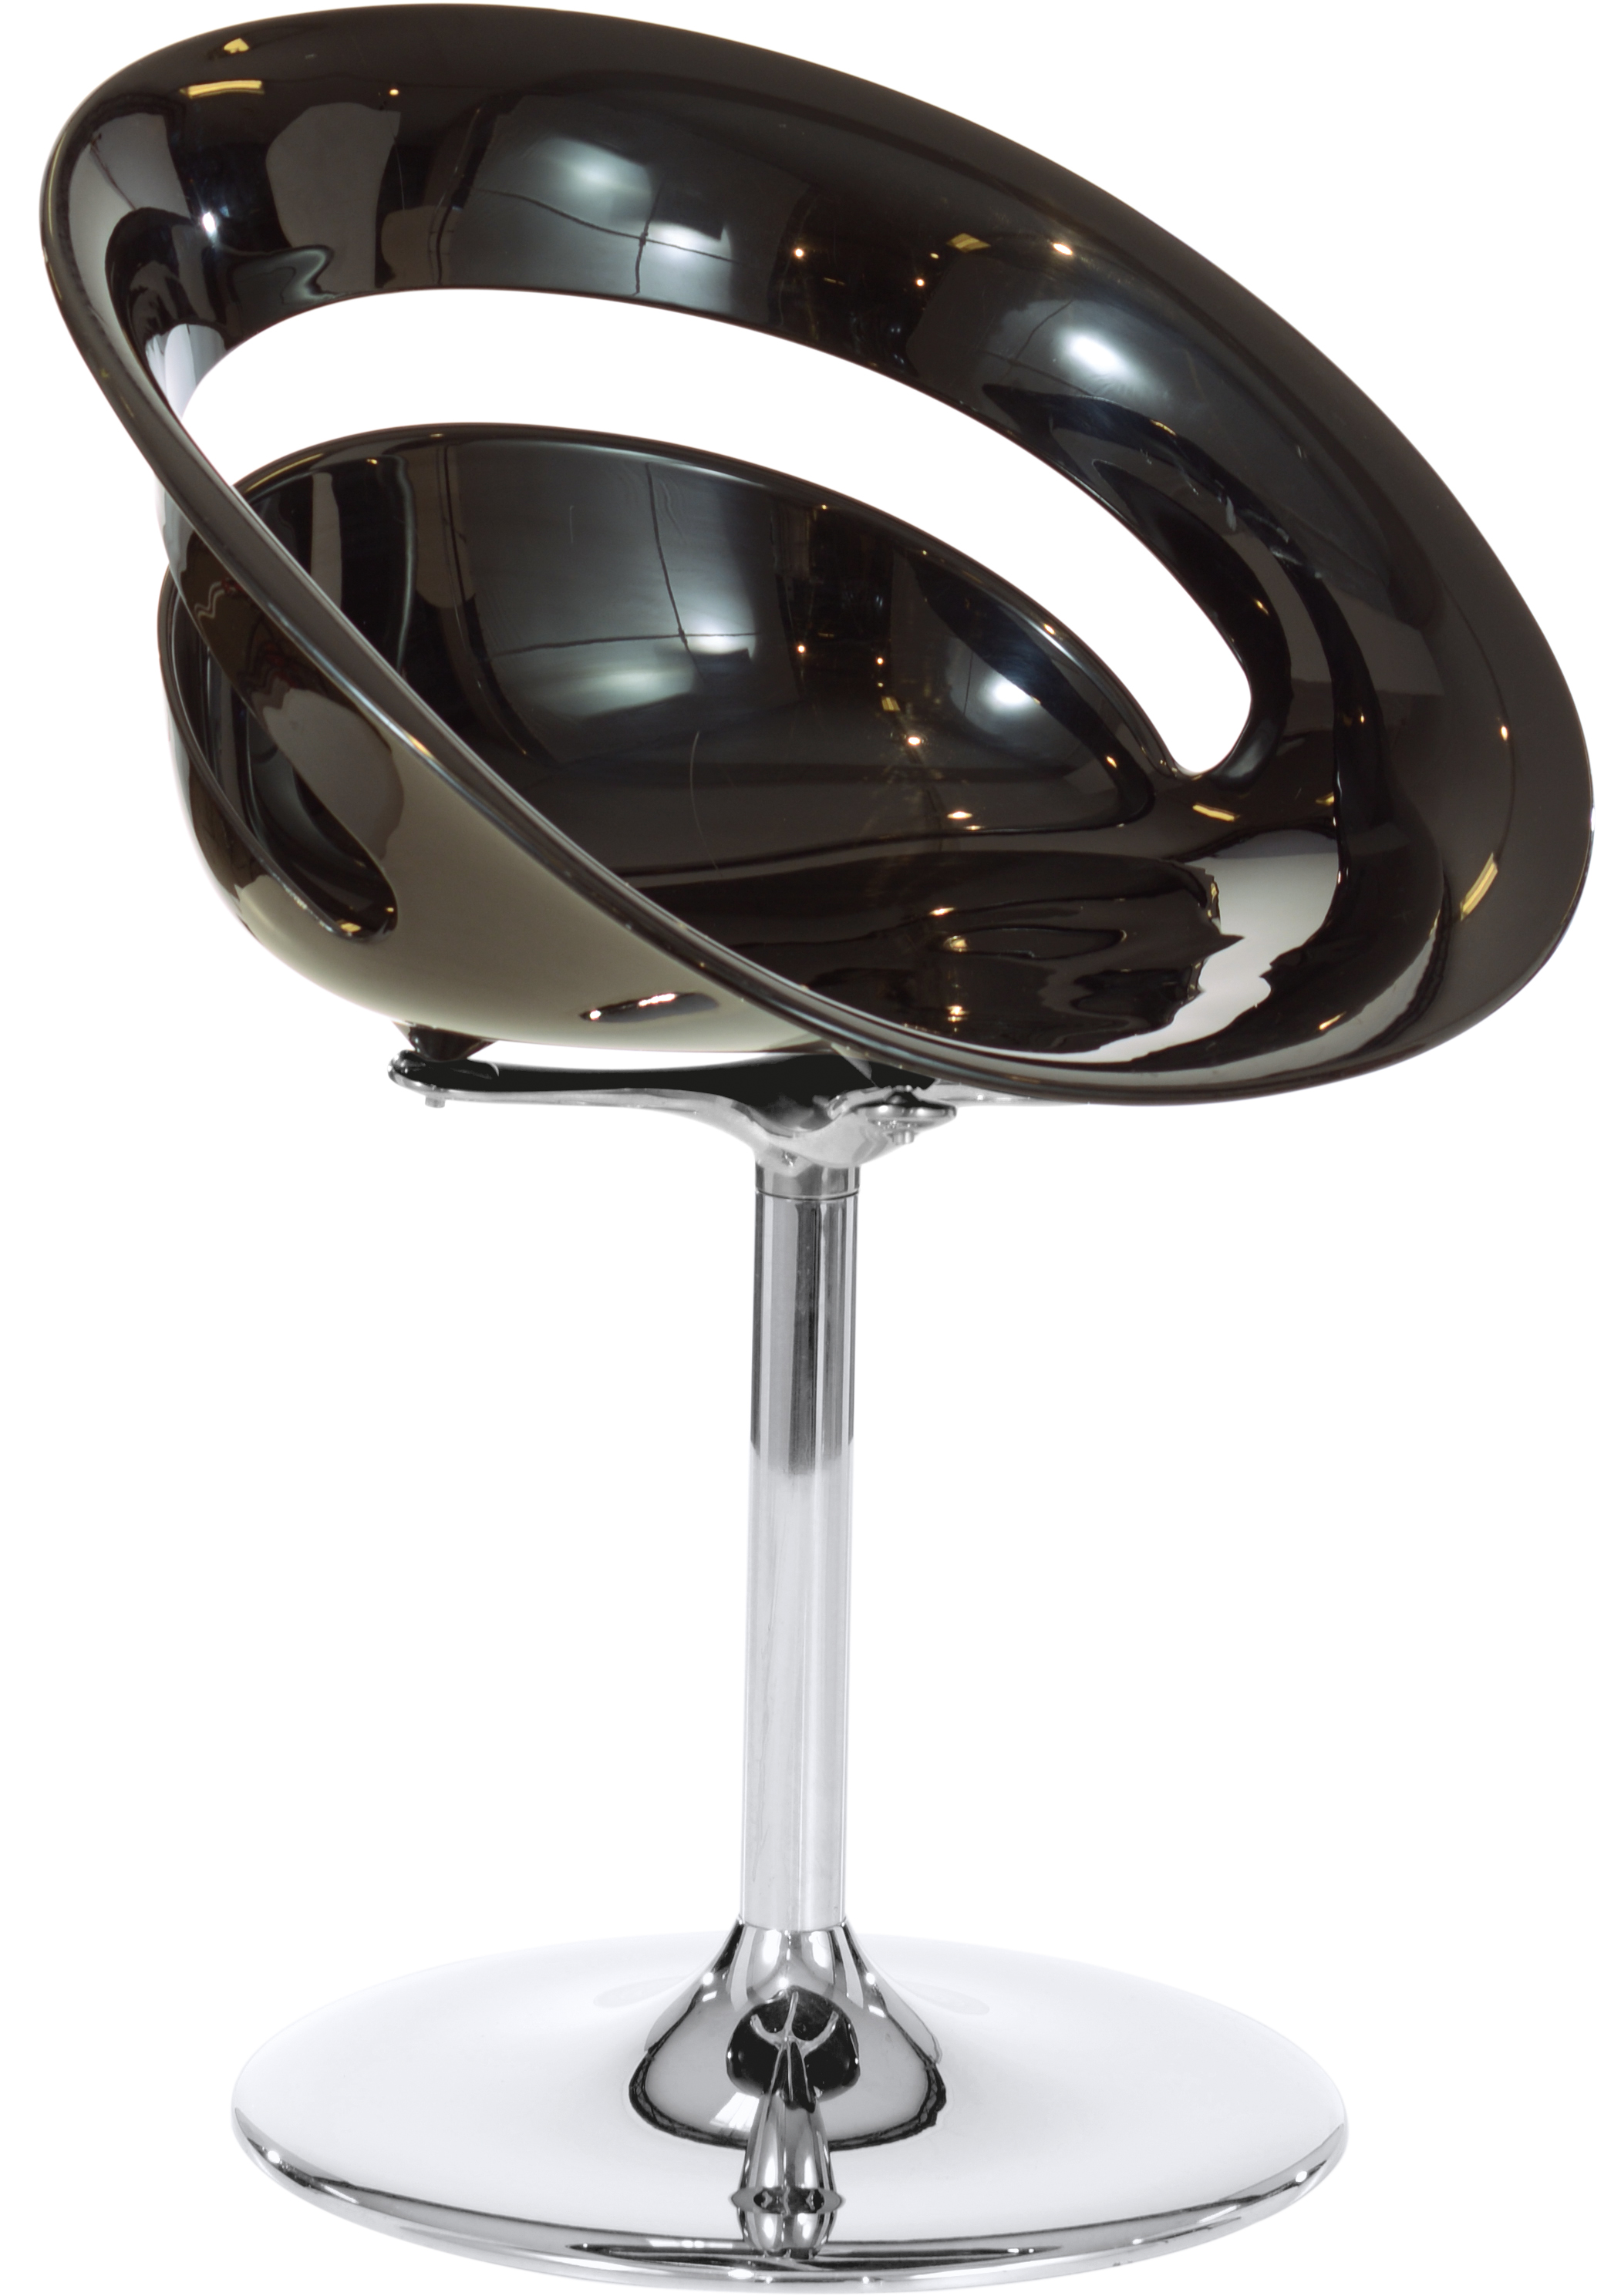 Design-Stuhl Kristina 2 II (Stuhl-Sessel-Stil, ideal für Eisdiele, Gastro, Beauty-Salon, rot / schwarz / weiß / transparent)